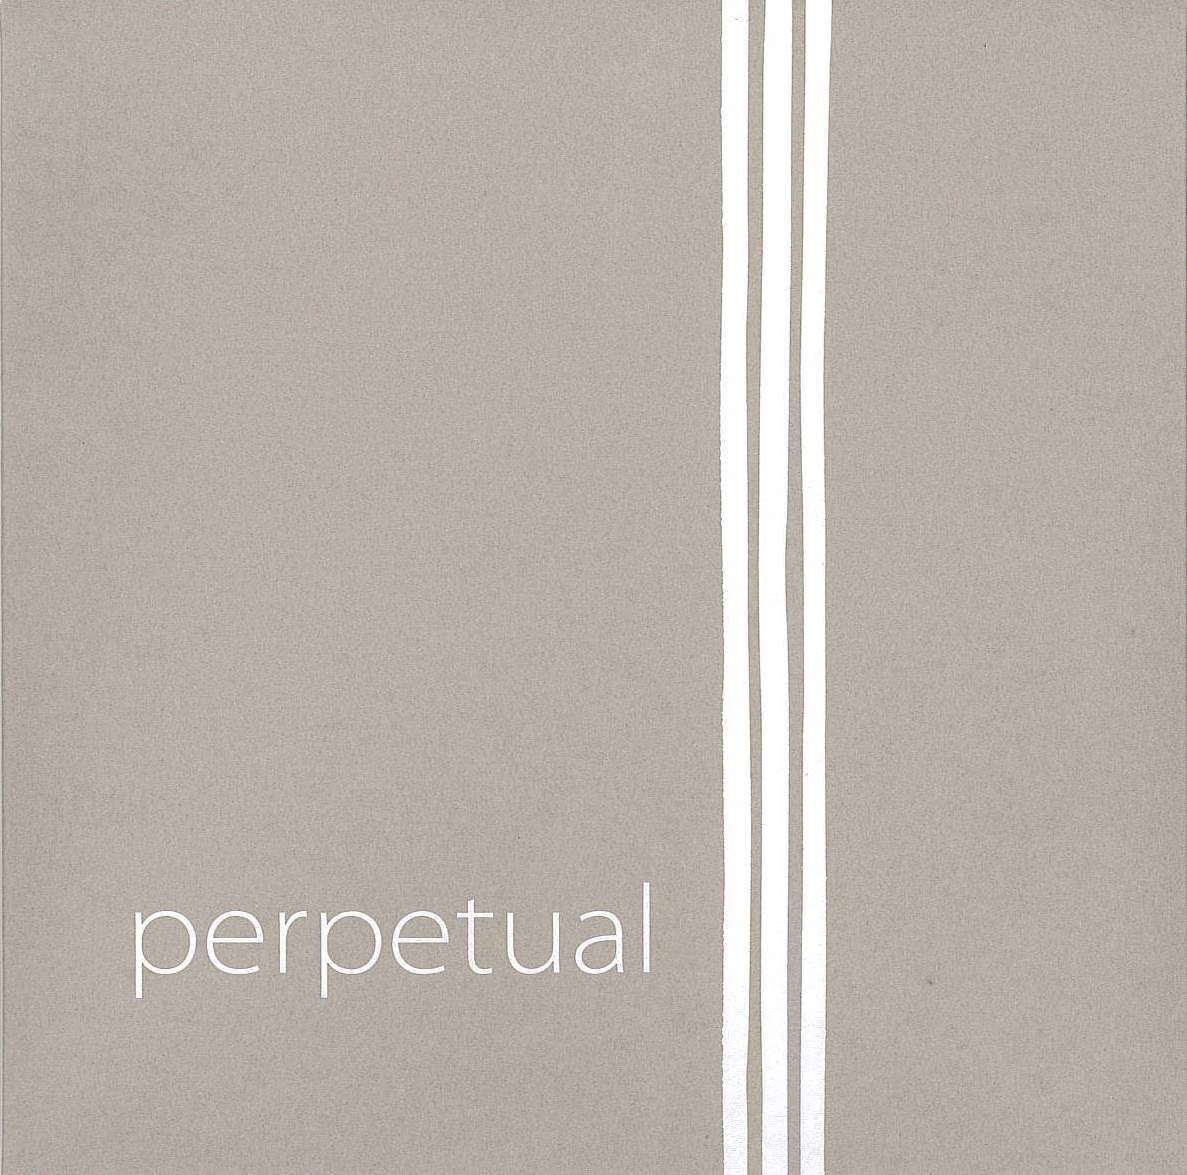 【Perpetual】-Pirastro- - I Love Strings. | 国内最大級クラシック弦の 